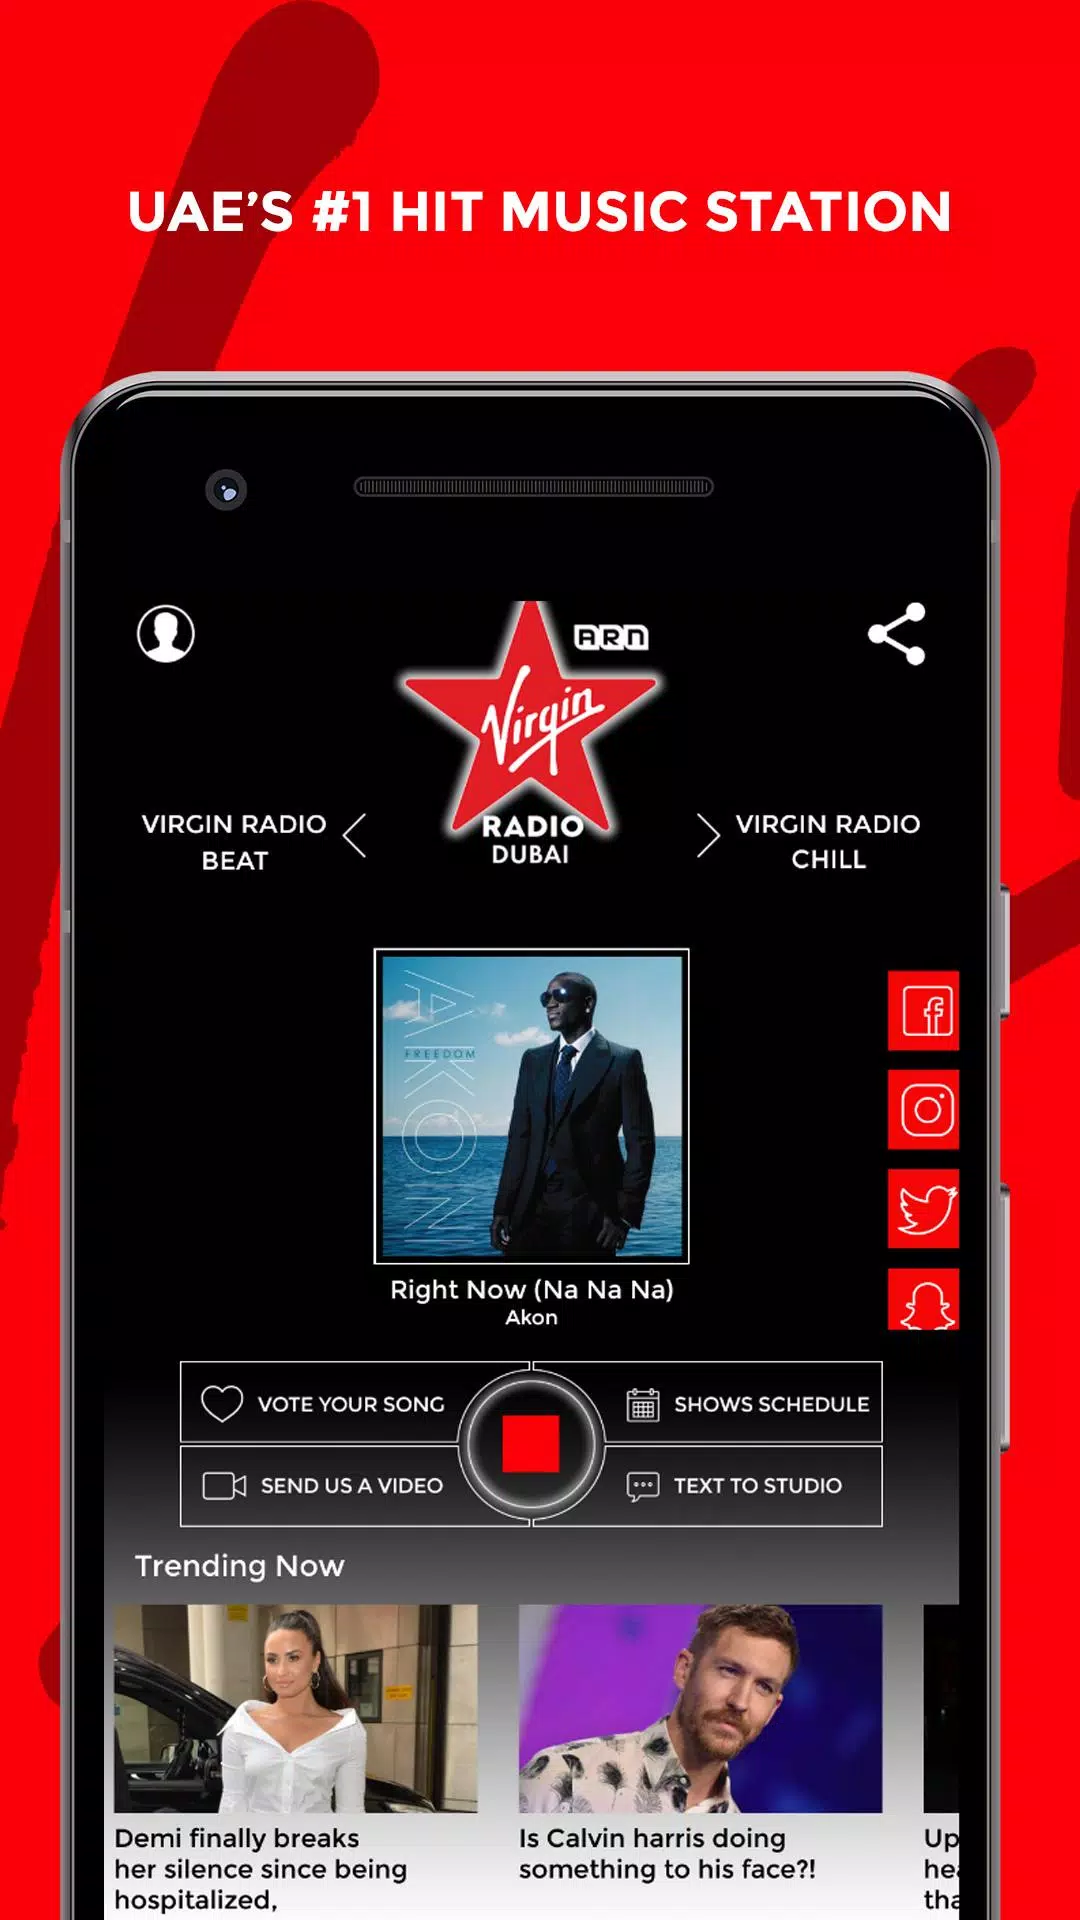 Virgin Radio Dubai 104.4 for Android - APK Download